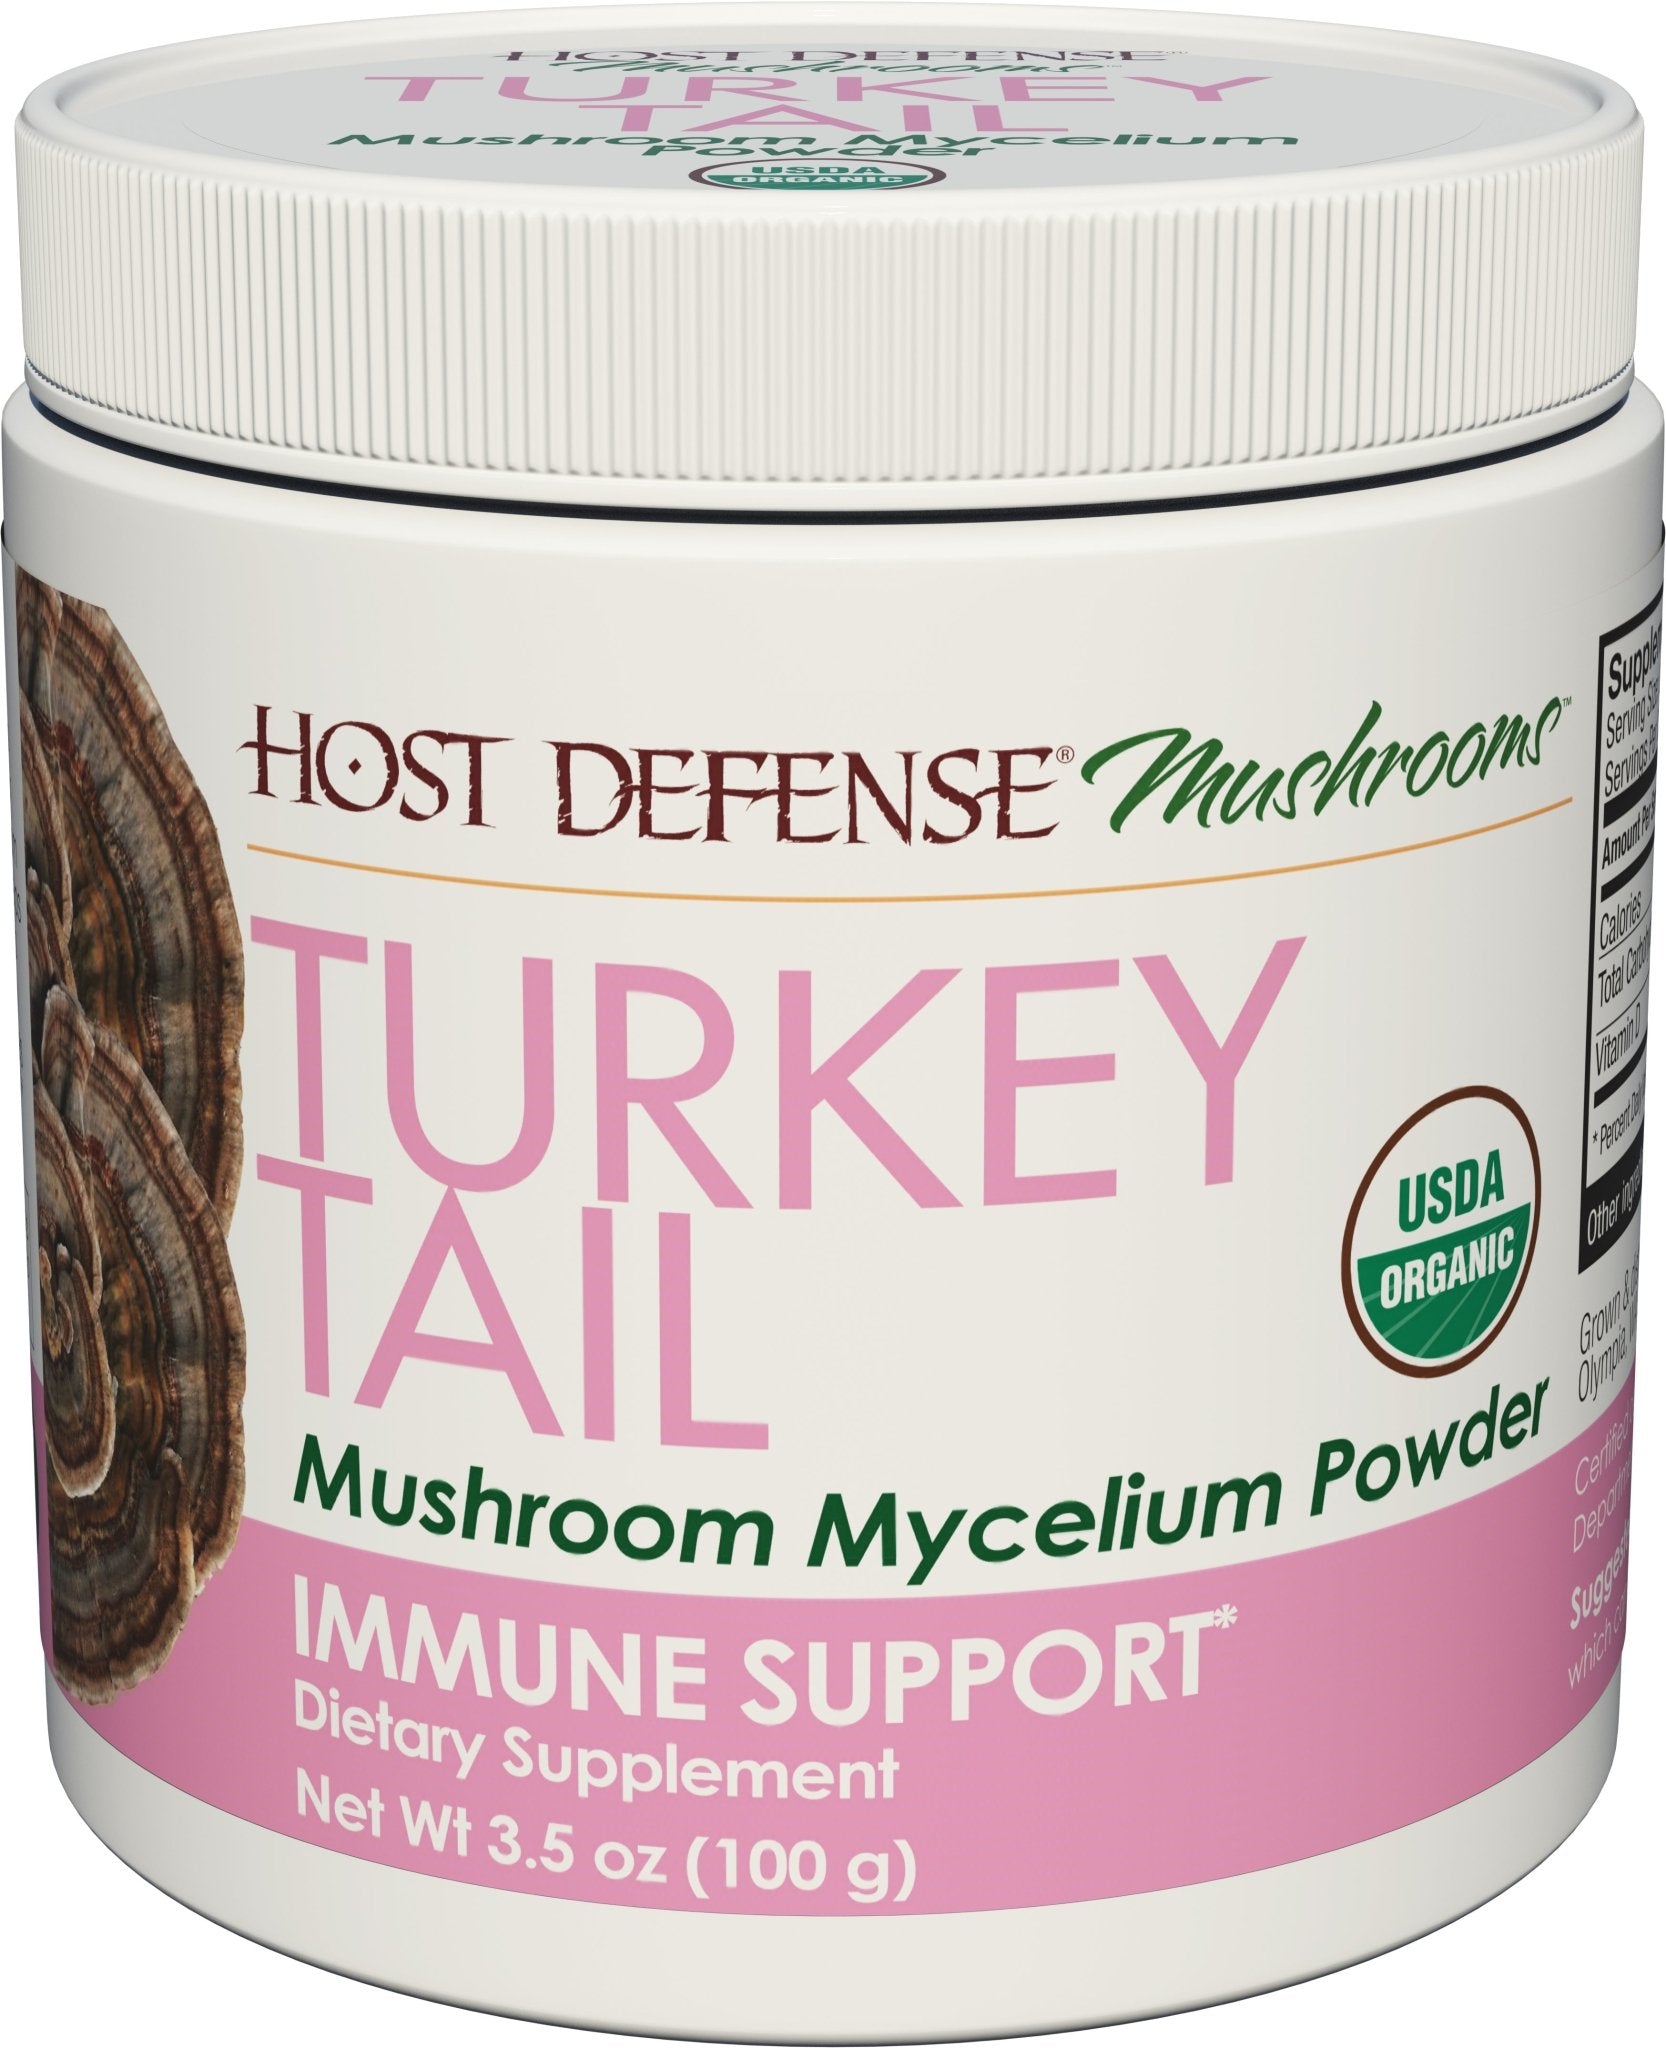 Turkey Tail Powder - Trichome Seattle - Host Defense - Fungi